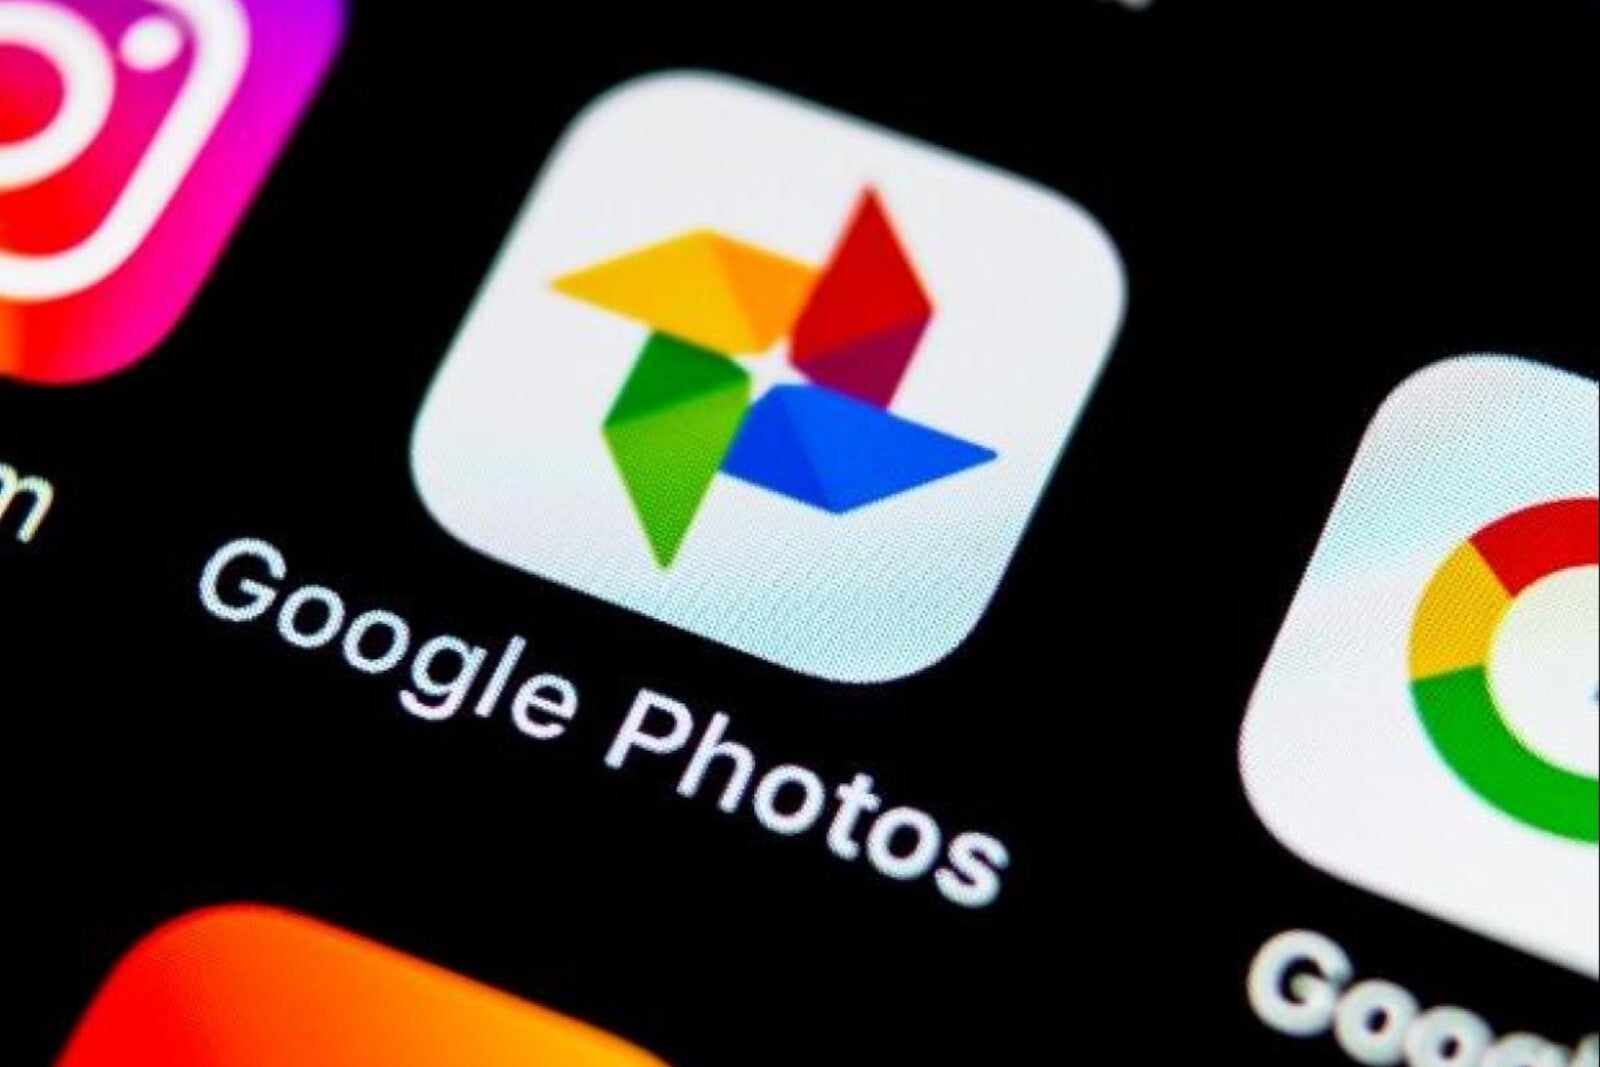 Does Pixel 6 get unlimited Google Photos storage?